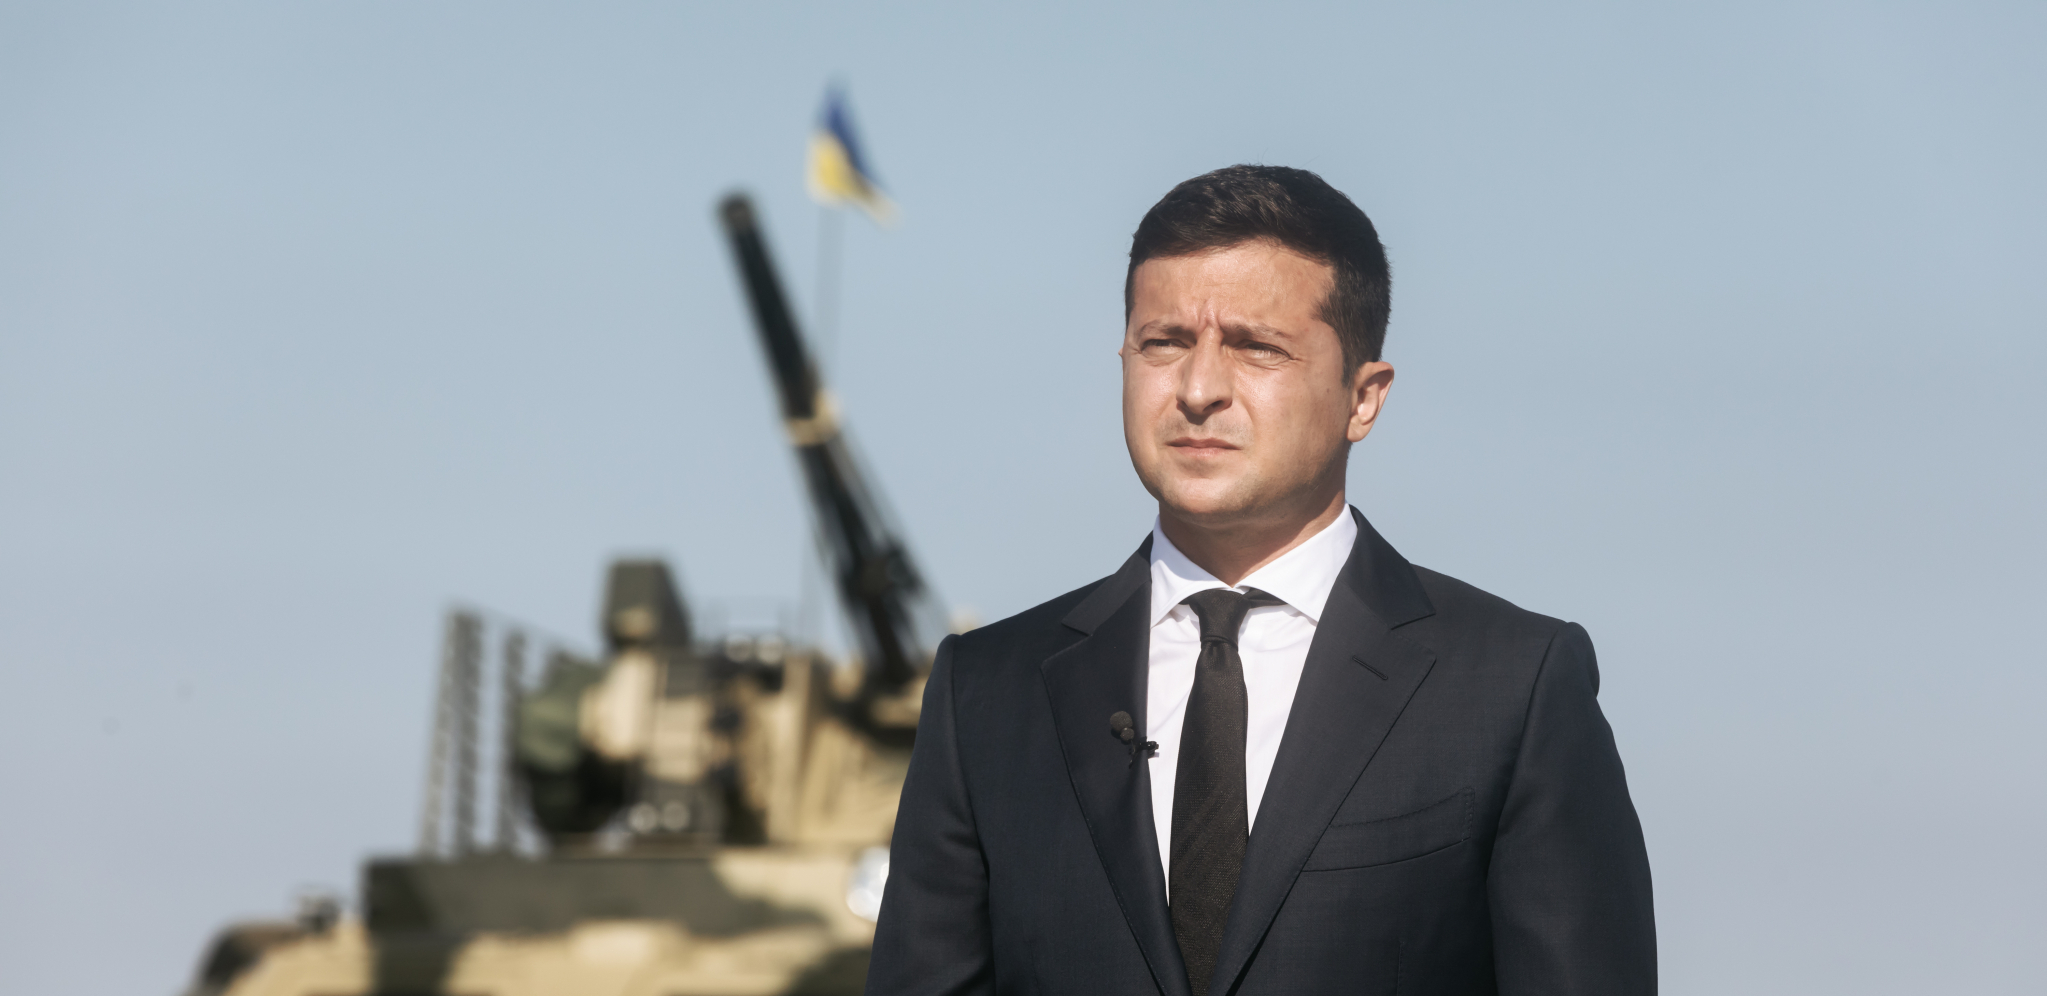 VANREDNO SE OBRATIO PREDSEDNIK UKRAJINE Zelenski javno otkrio kad i kako će se okončati rat sa Rusijom